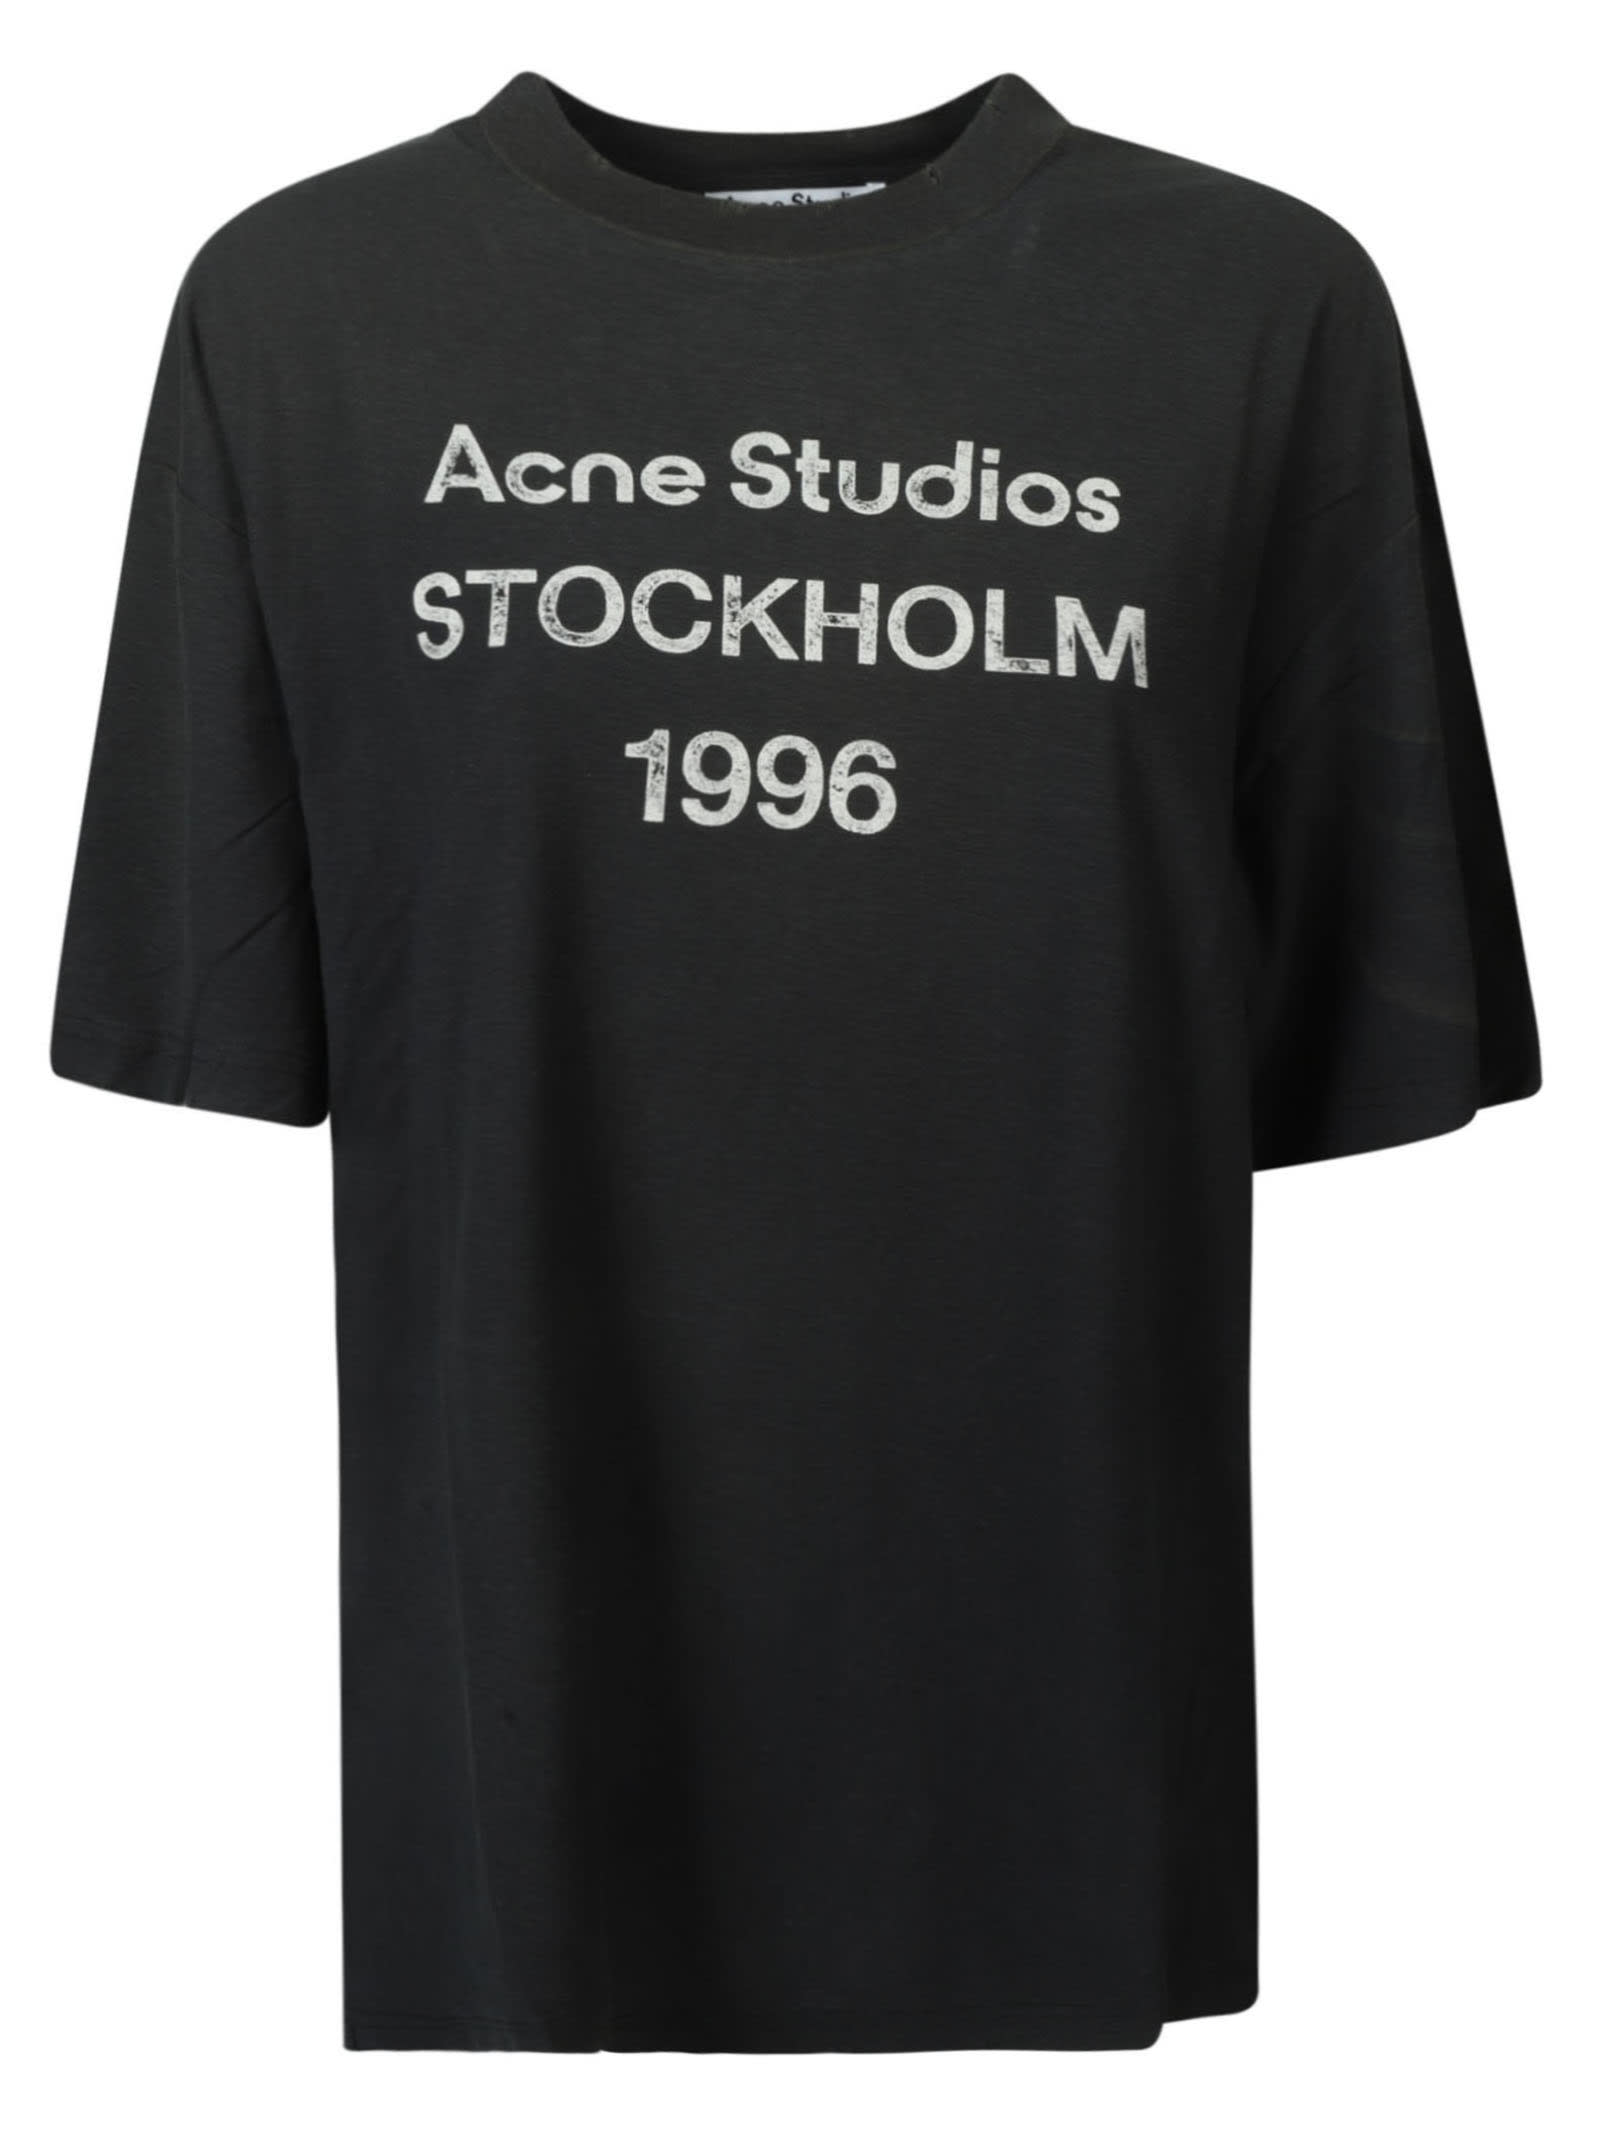 Acne Studios 1996 Stockholm Printed T-shirt